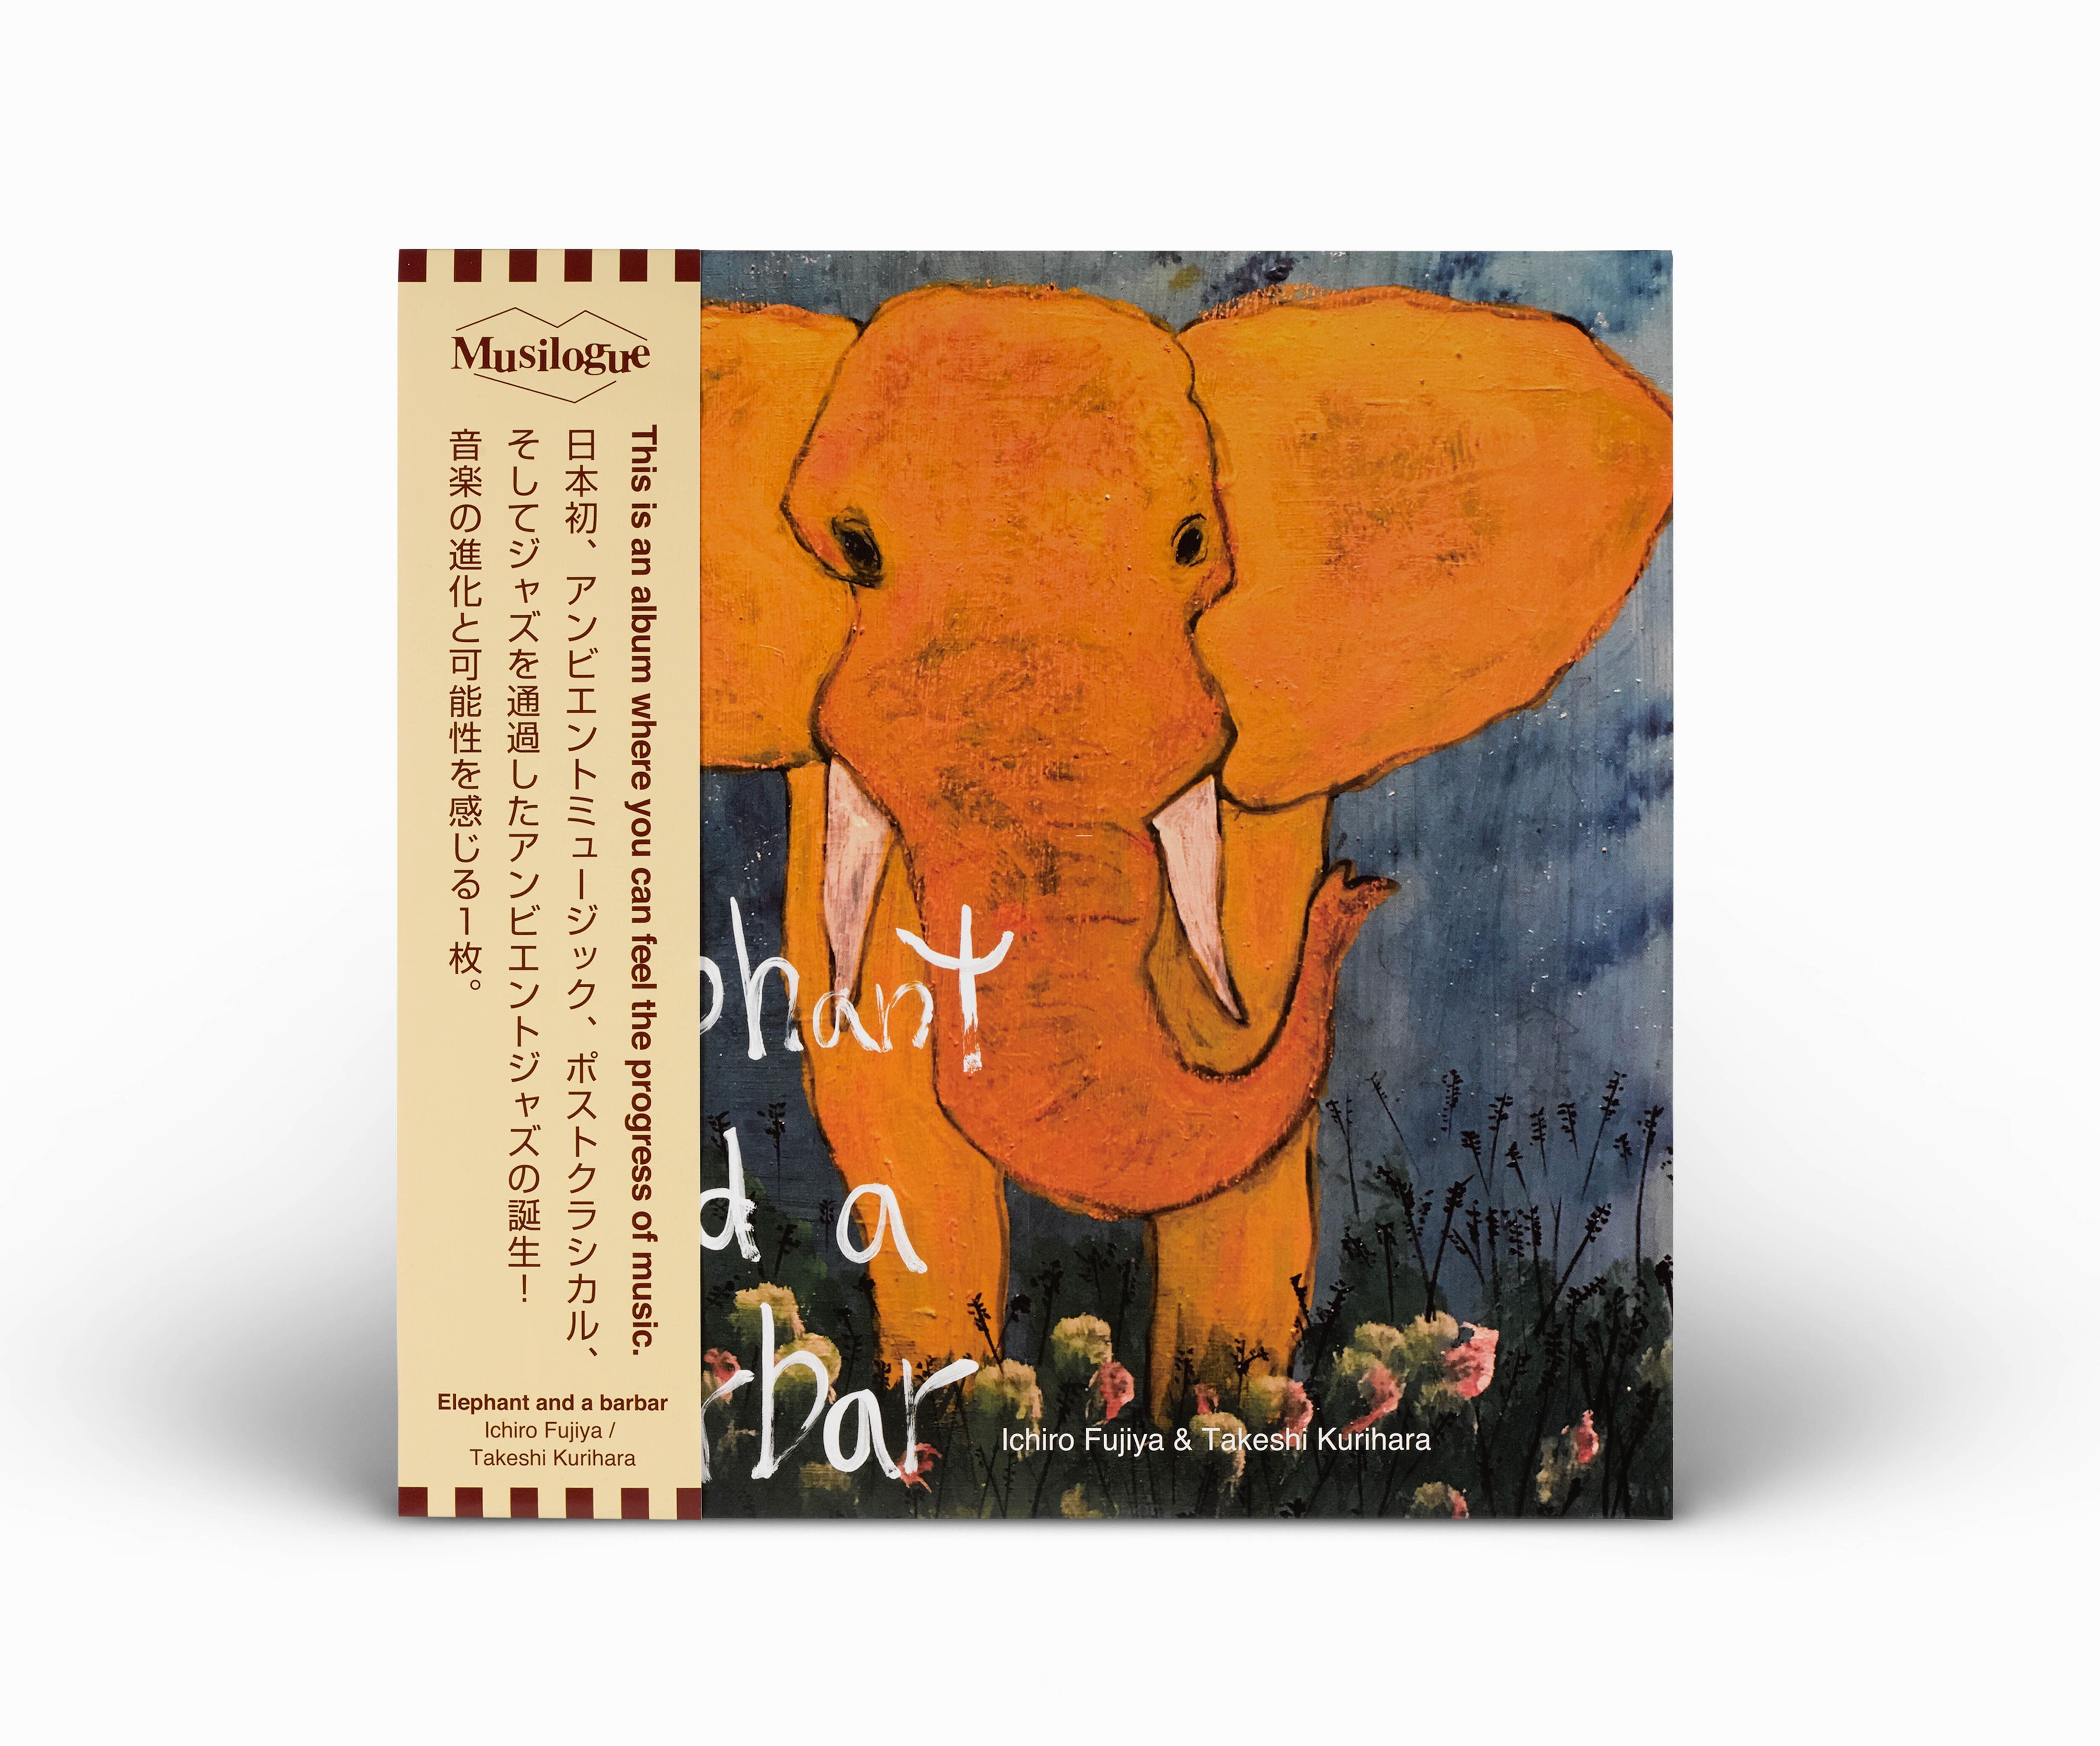 Elephant and a barbar / Ichiro Fujiya & Takeshi Kurihara (The 3rd pressing vinyl LP)